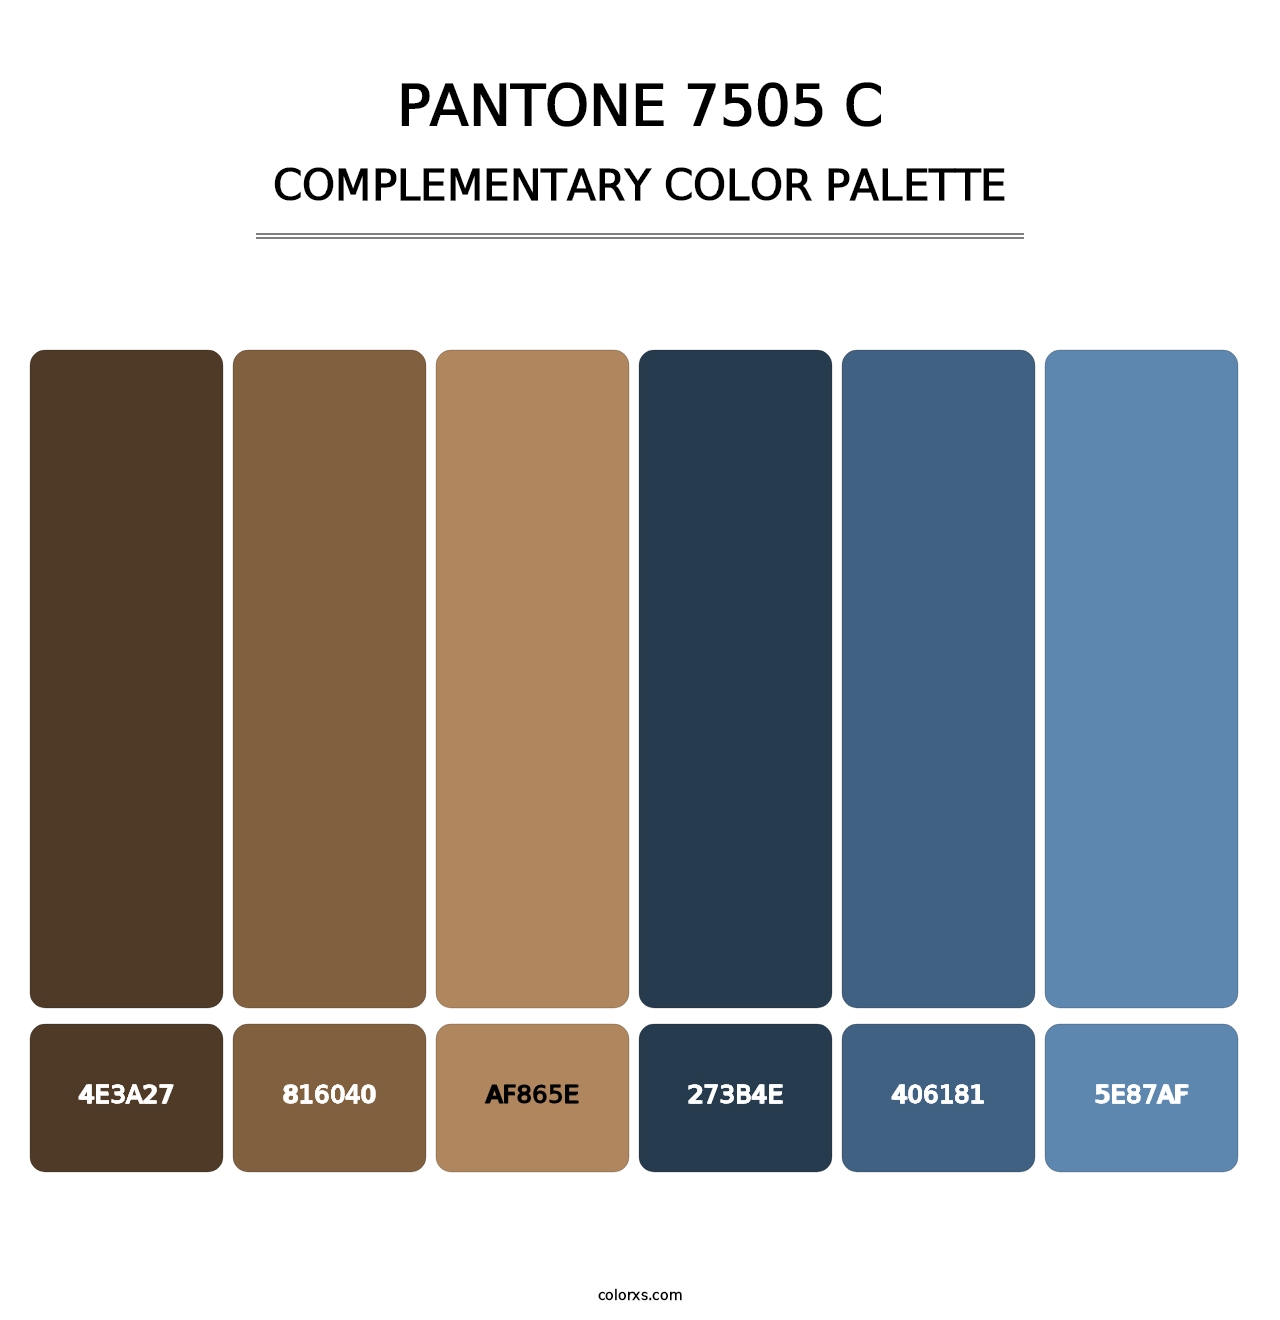 PANTONE 7505 C - Complementary Color Palette